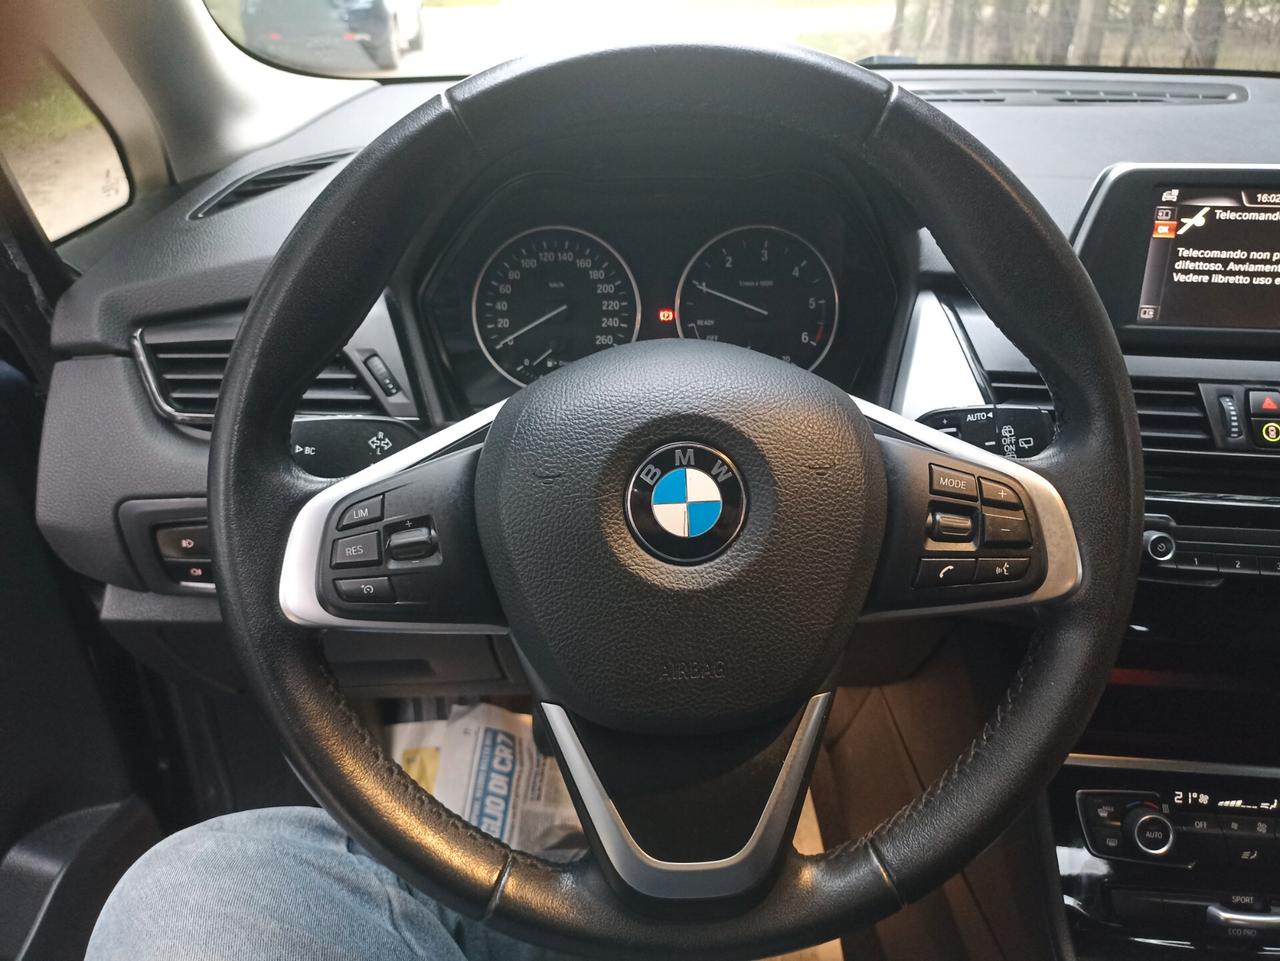 BMW SERIE 2 1.5 TDI 116cv 05/2016 KM 122.000 TAGLIANDI BMW